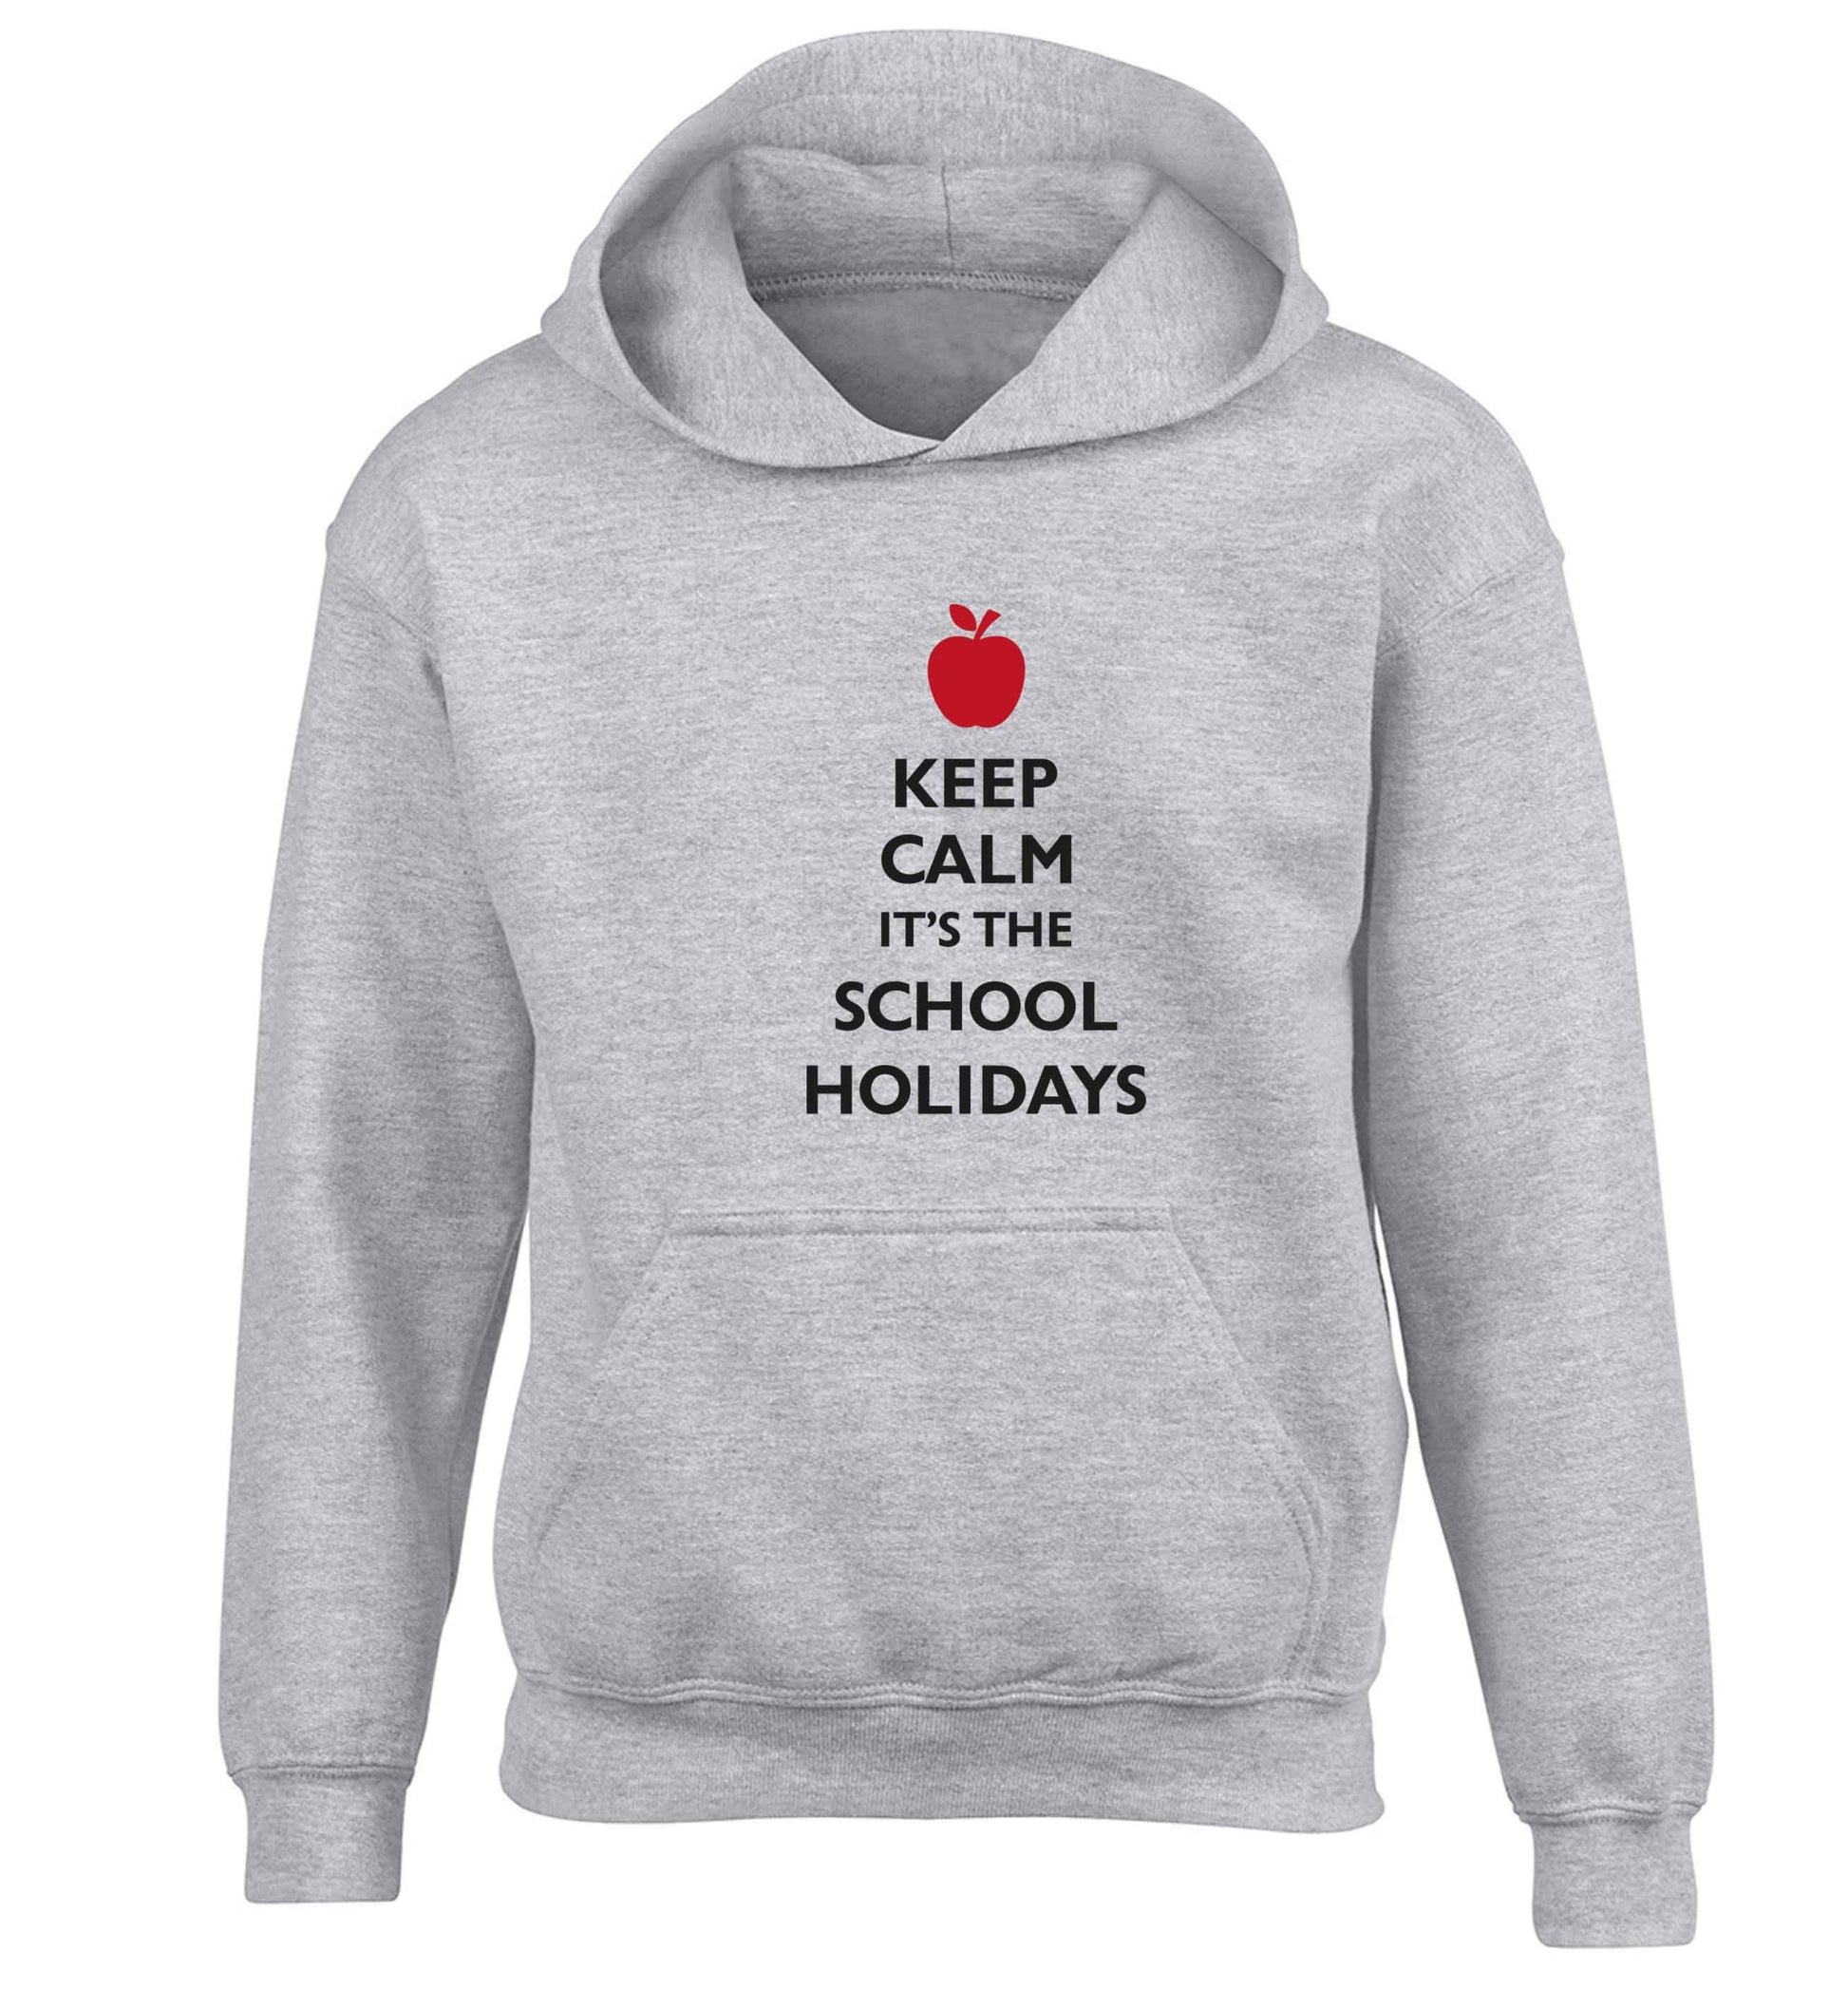 Keep calm it's the school holidays children's grey hoodie 12-13 Years